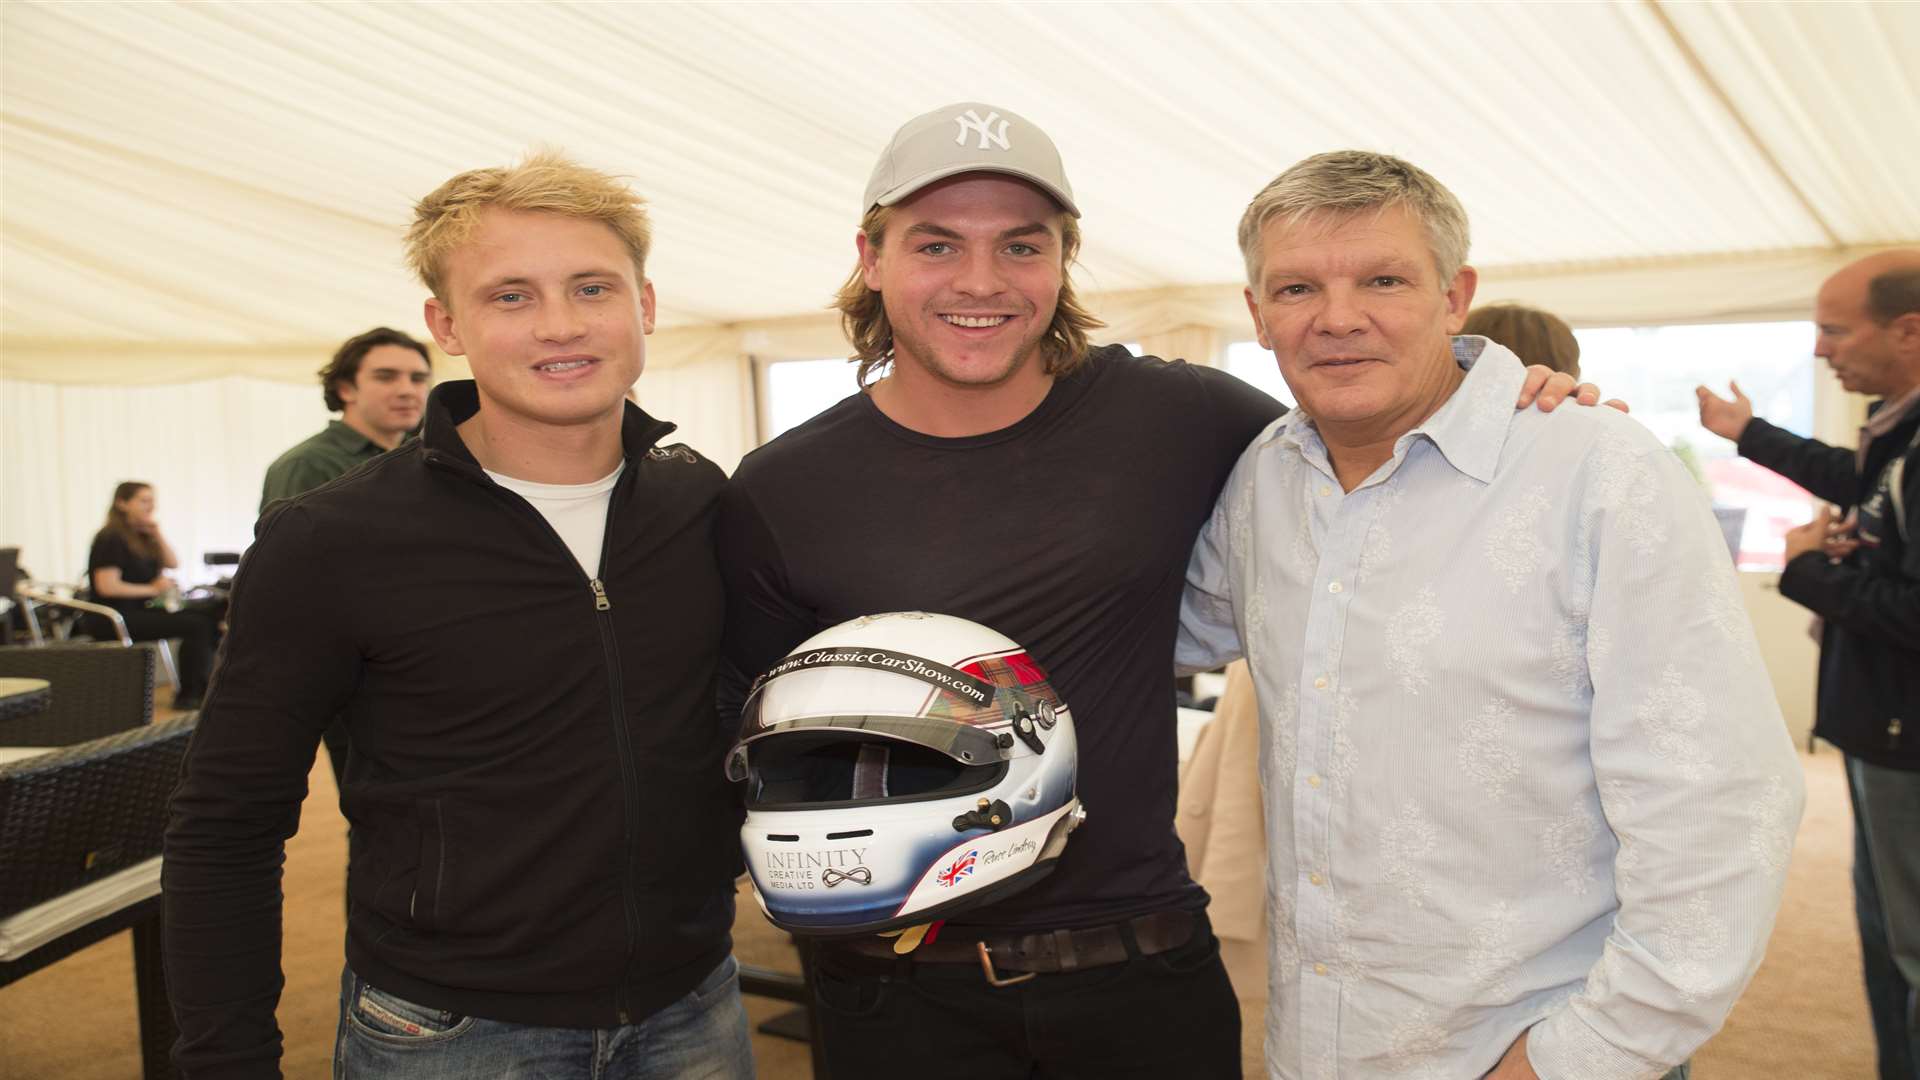 Professional racers Rupert Svendsen-Cook and Jack Clarke with Russ Lindsay